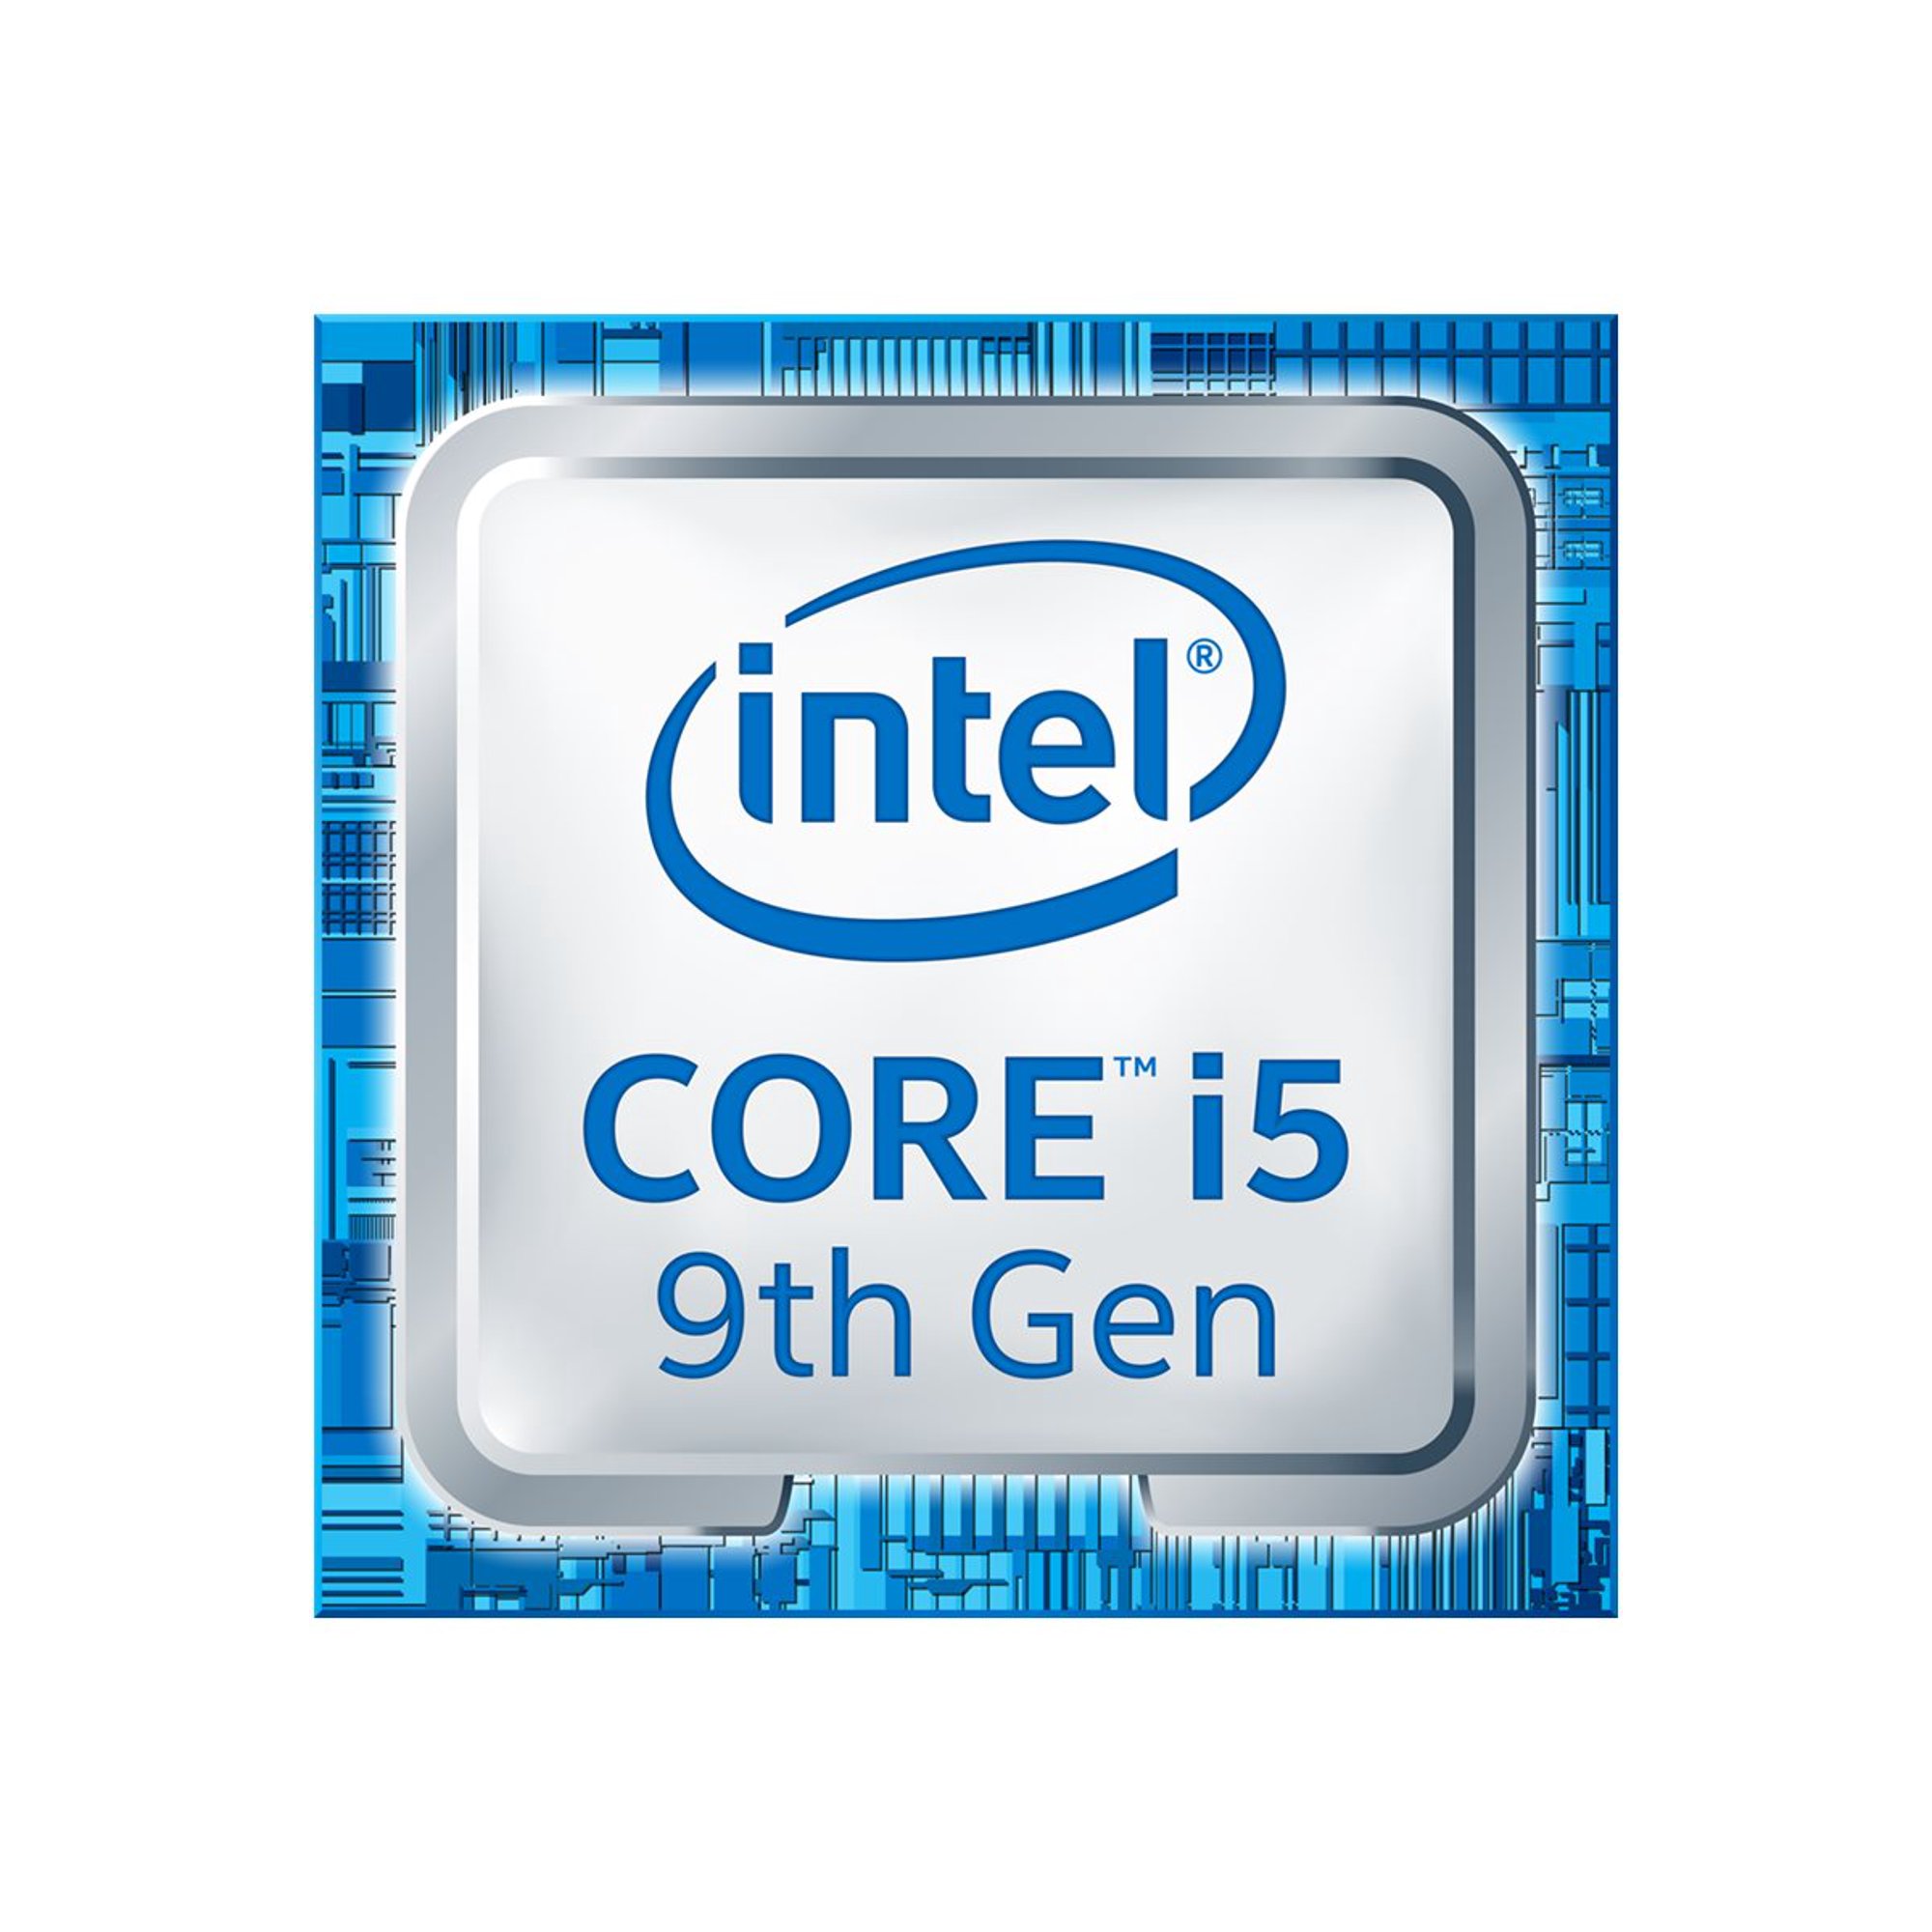 Intel core gold. Intel Xeon Silver 4210. Intel Core i5-6500. Intel Core i3-9100f. Intel Core i5-9400f.